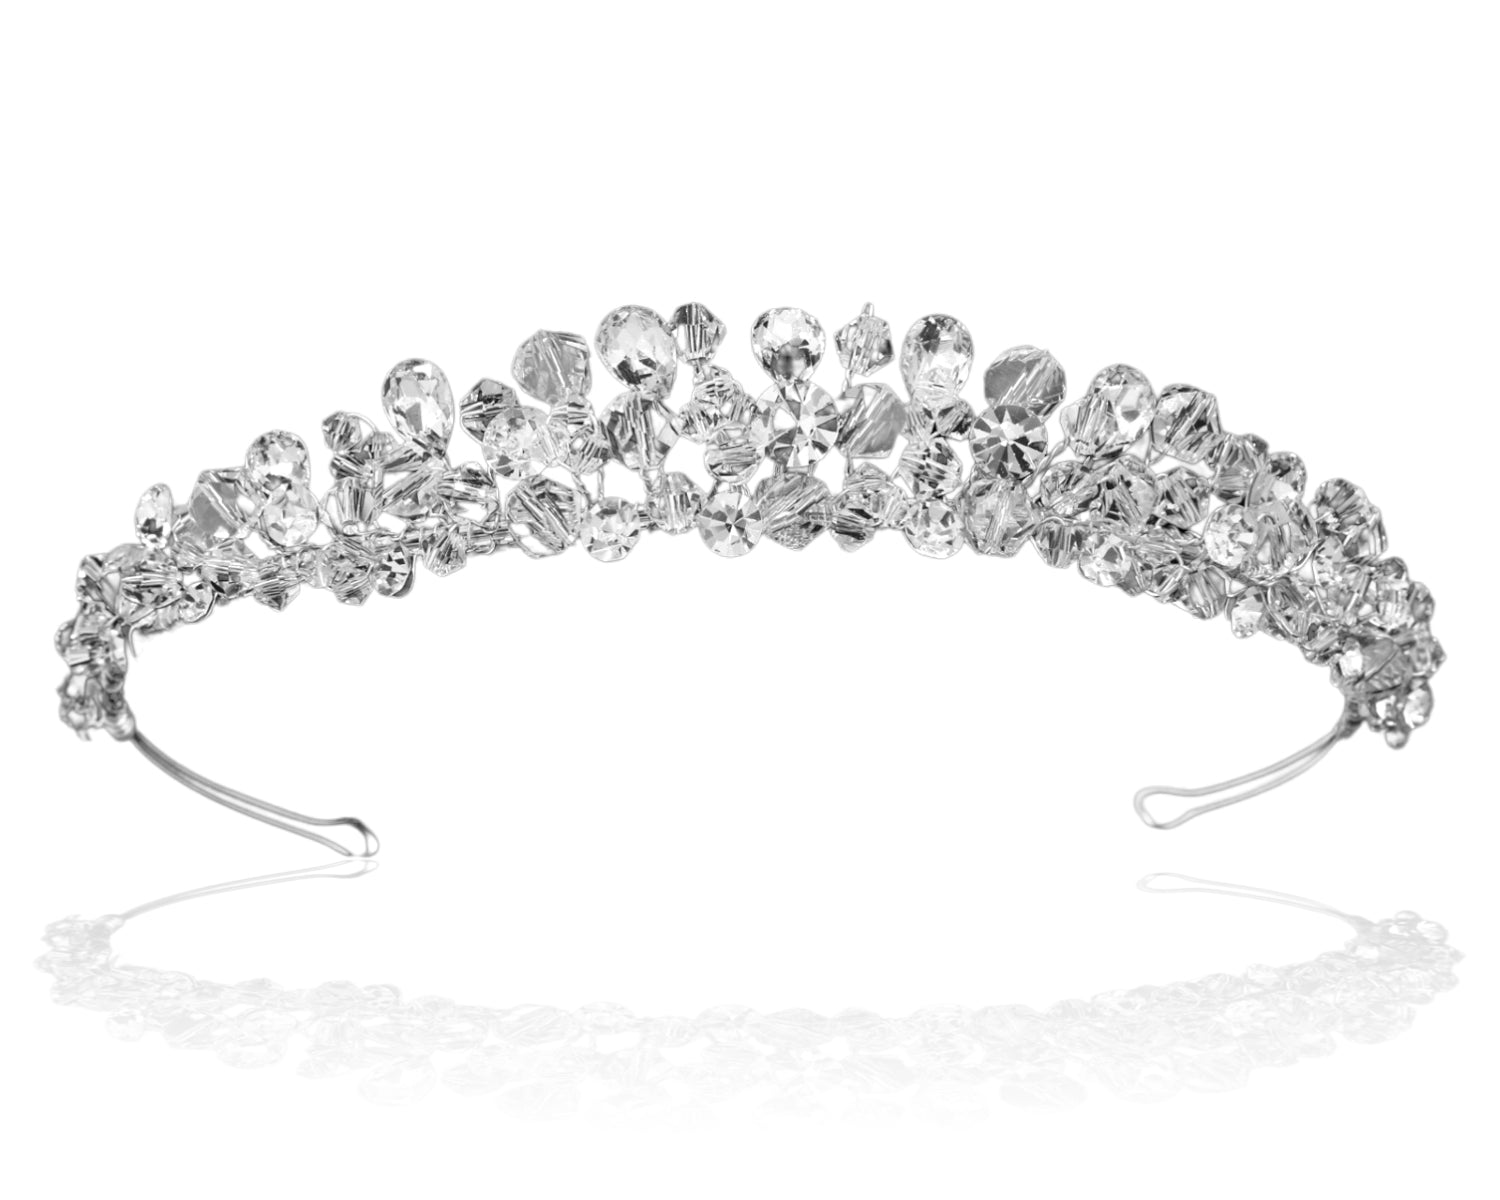 Crystal Pear Cut Jewels and Beads Wedding Tiara